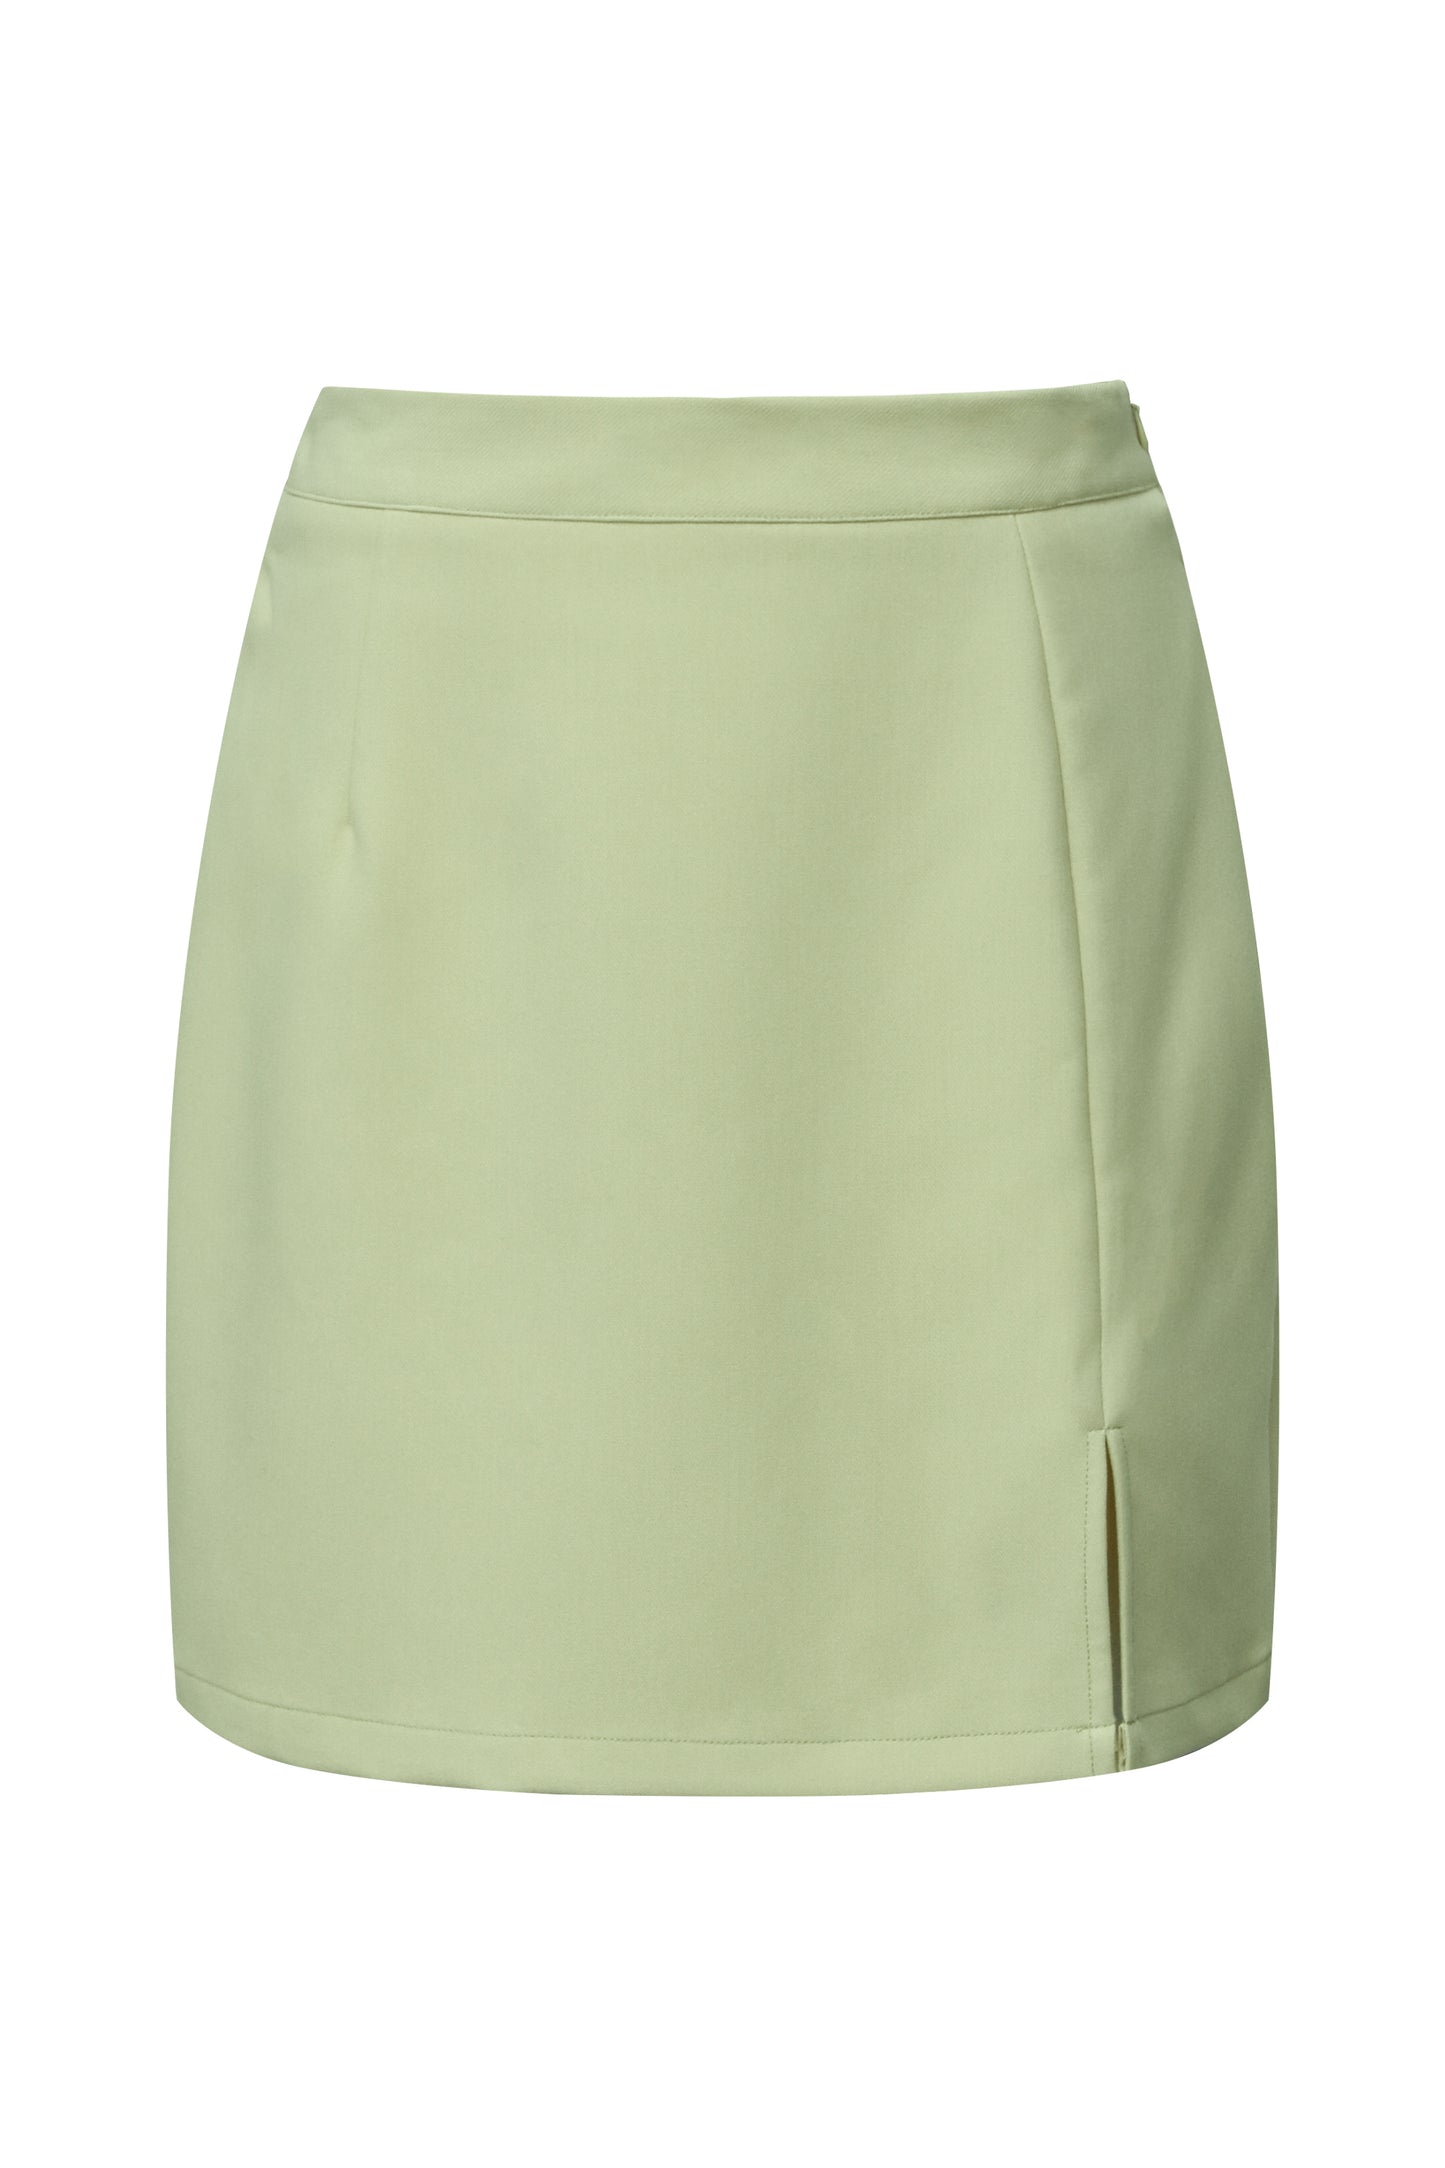 A-VIEW - Annali skirt - Mint